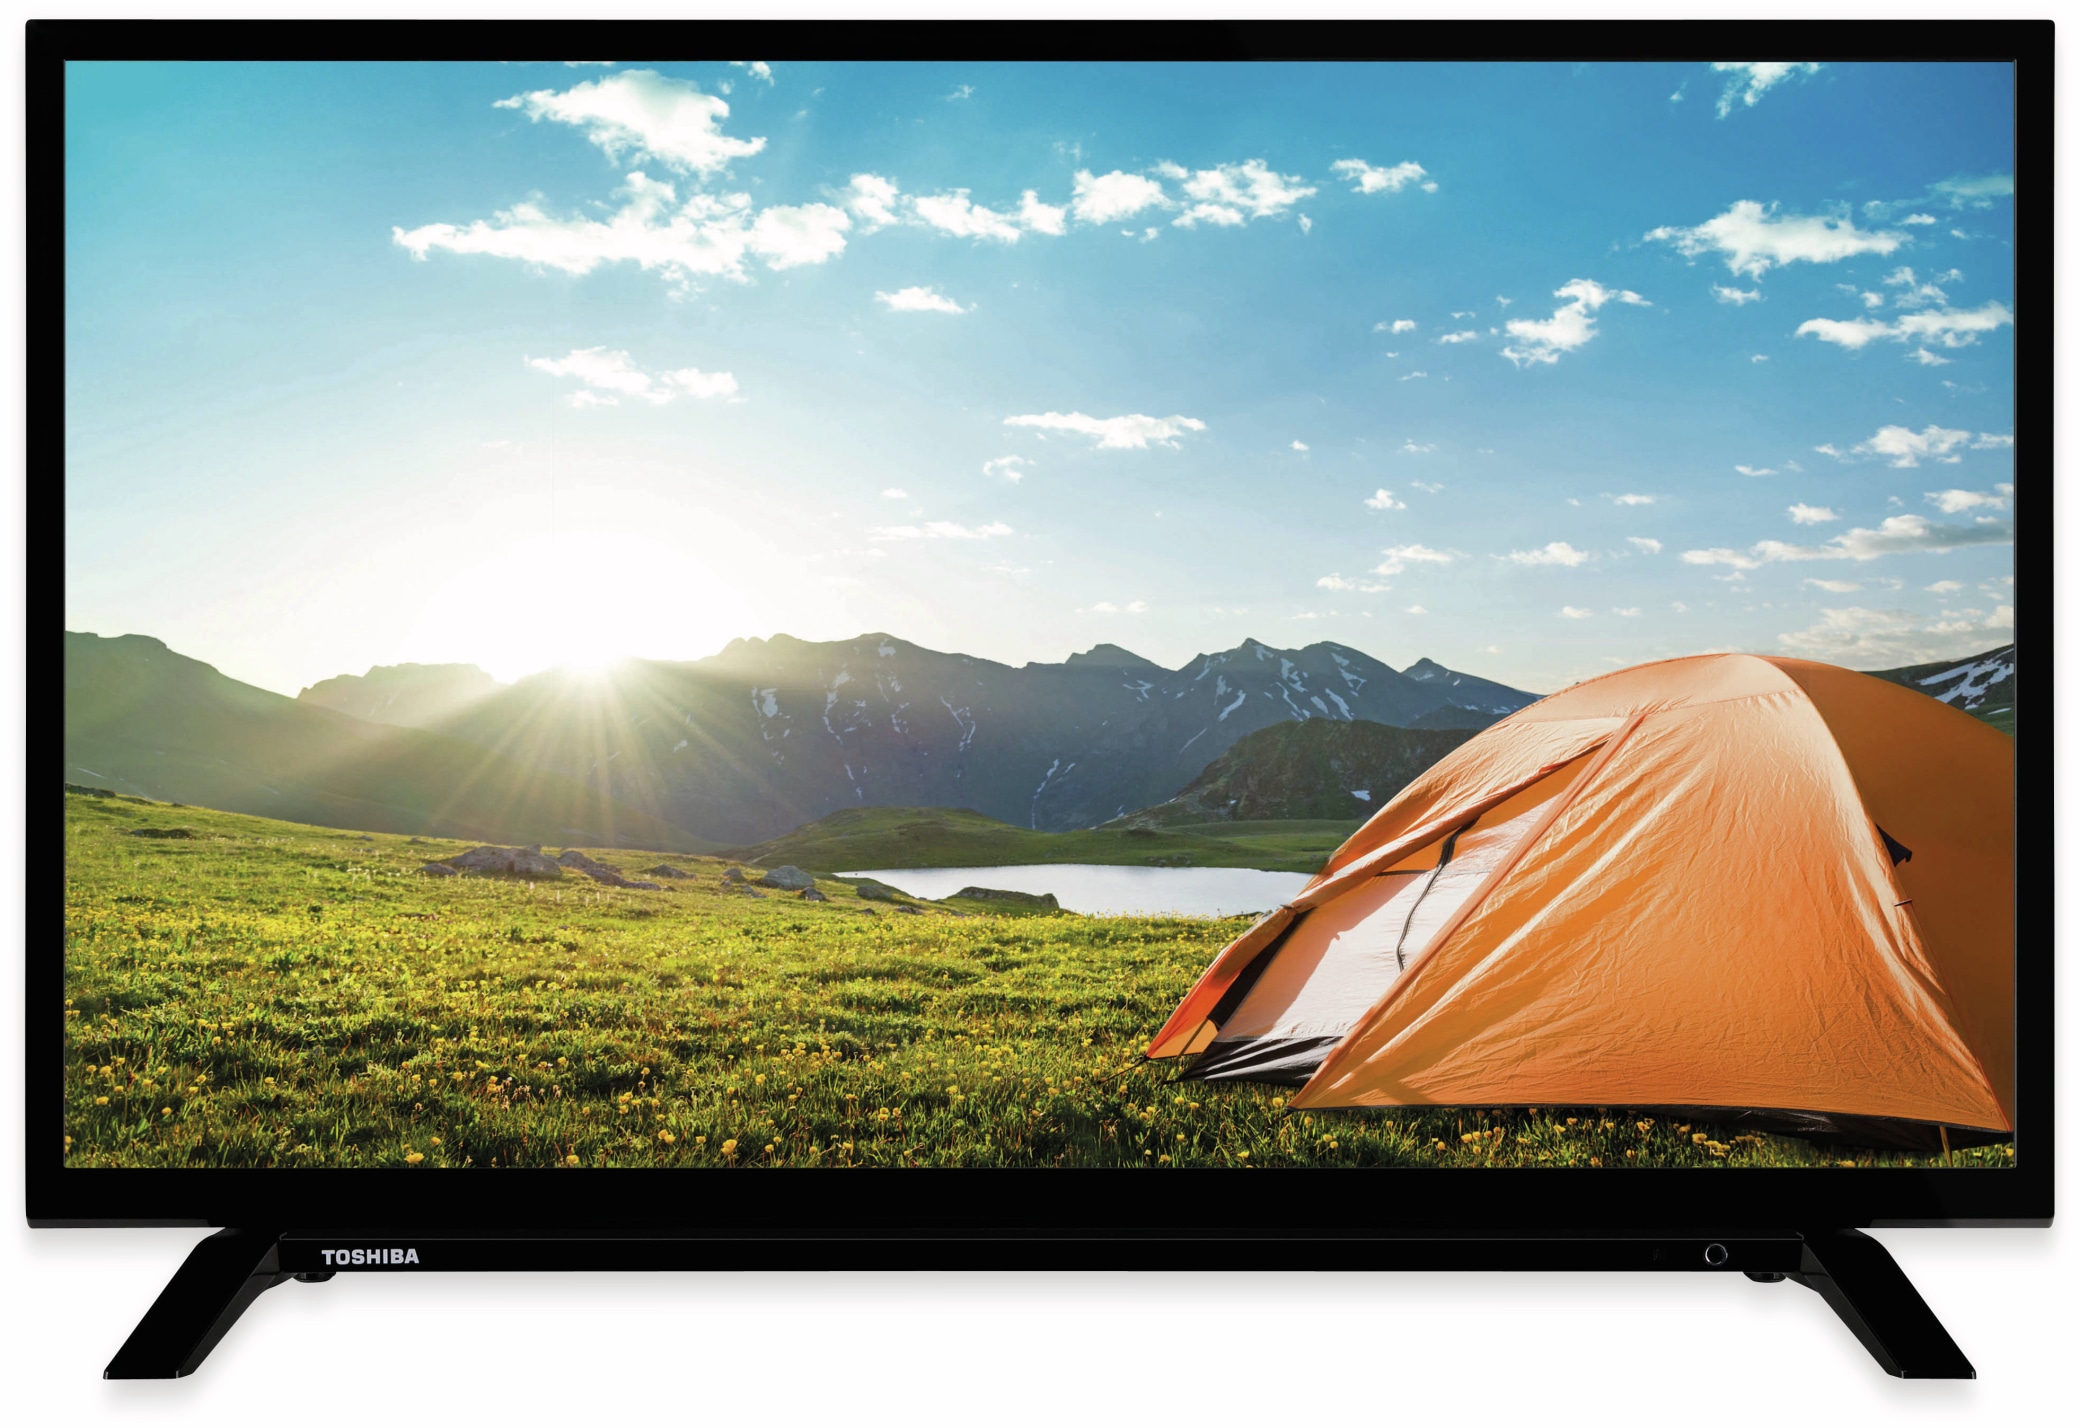 Toshiba LED-TV L3963 DGL, EEK: A+, 80 cm (32"), schwarz, mit DVD Player